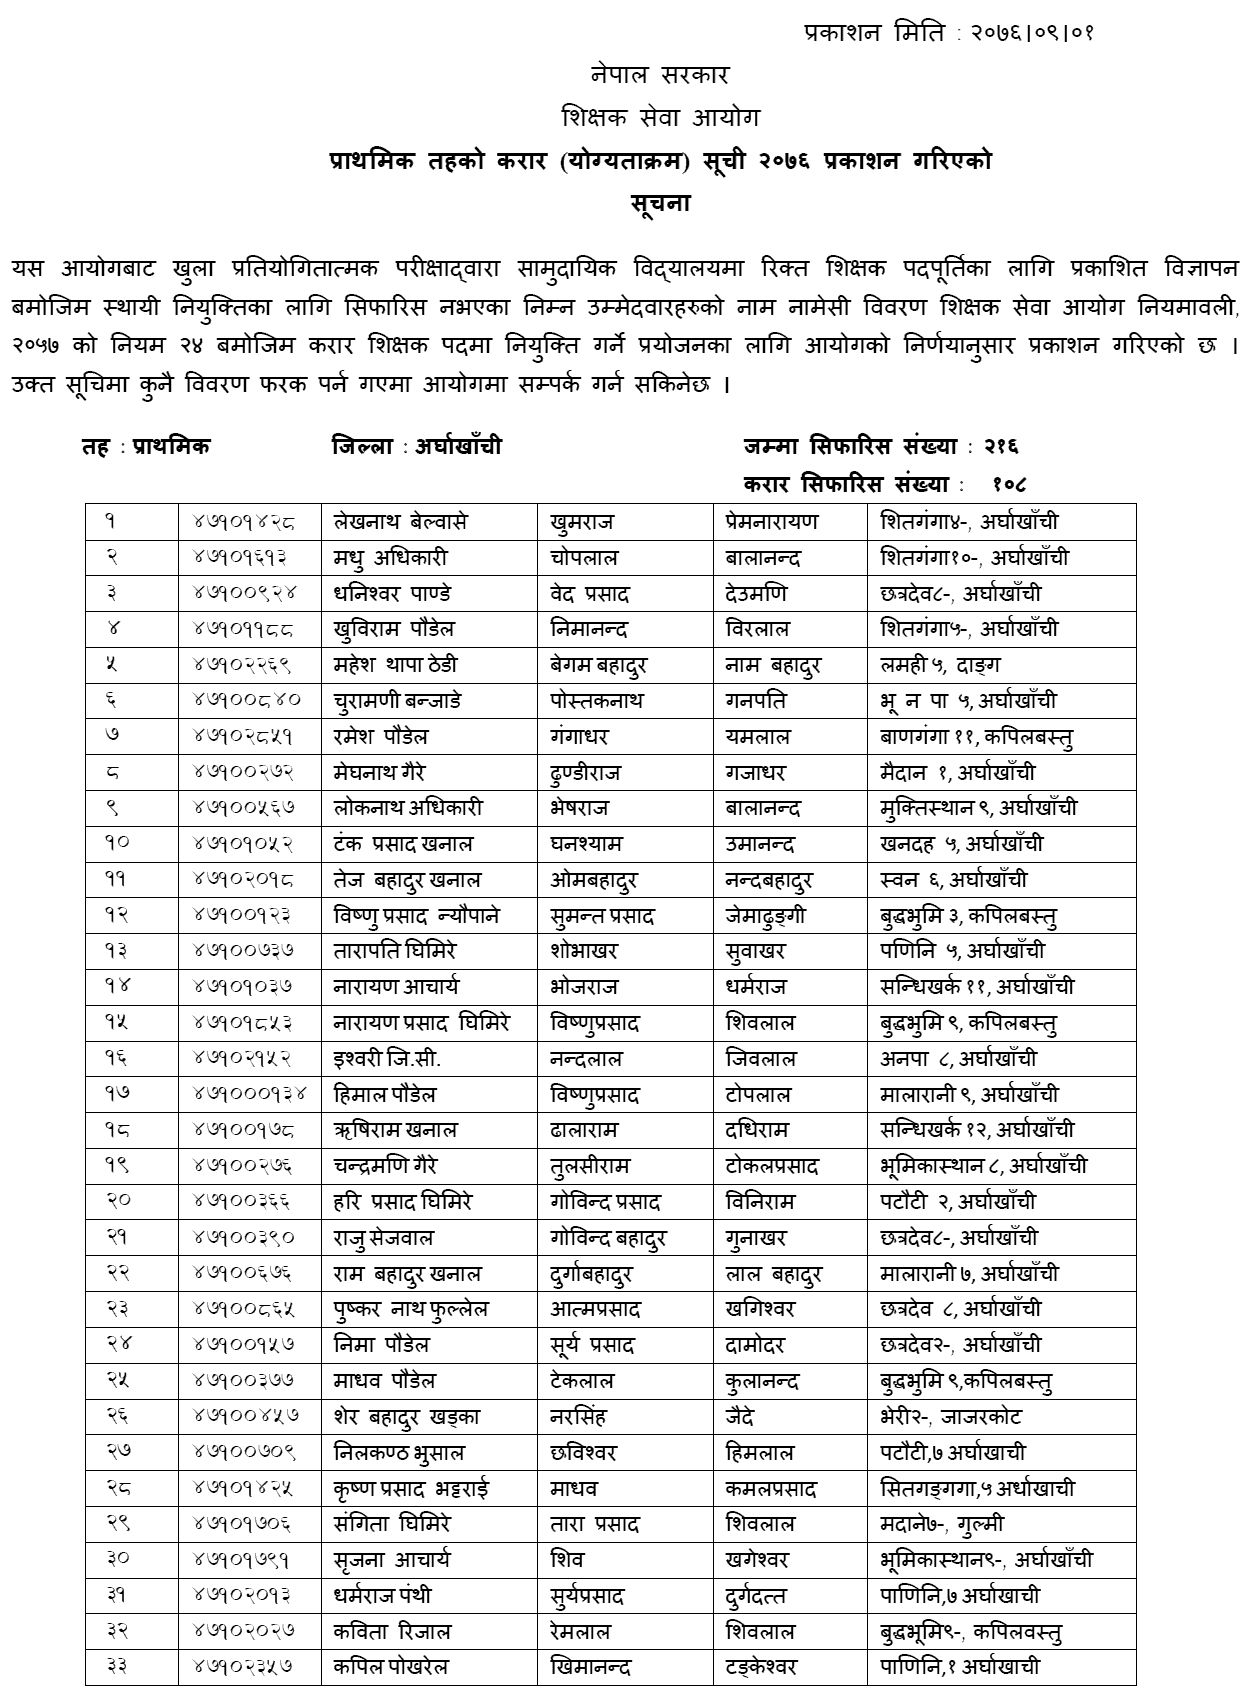 TSC Published Primary Level Contract List of Arghakhanchi